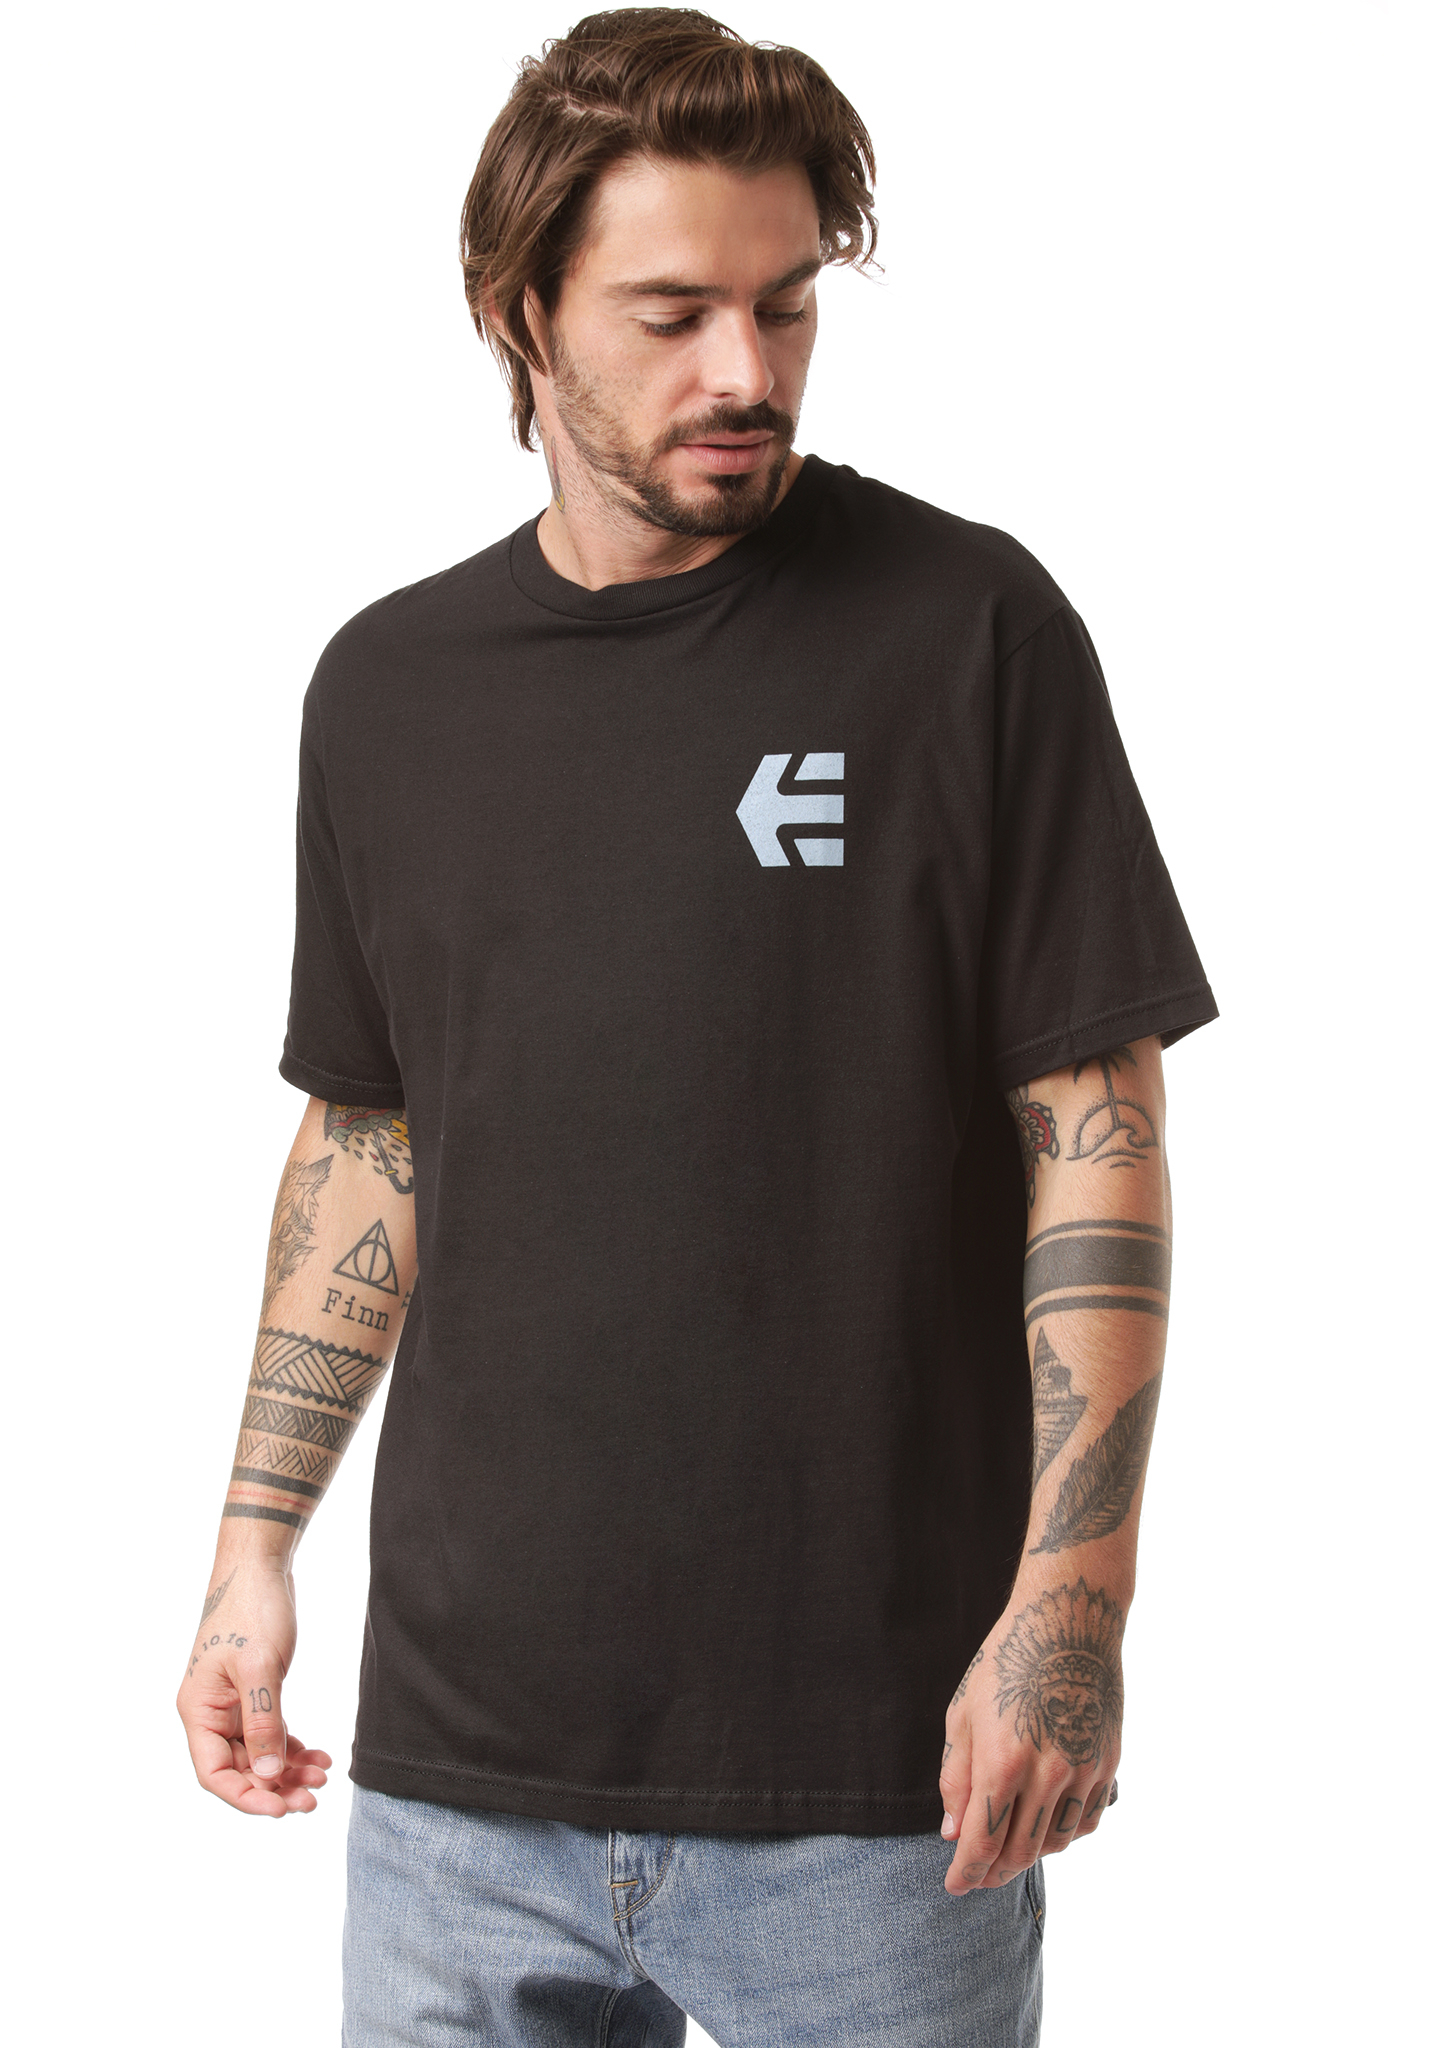 Etnies Mtn Label T-Shirt schwarz/blau L